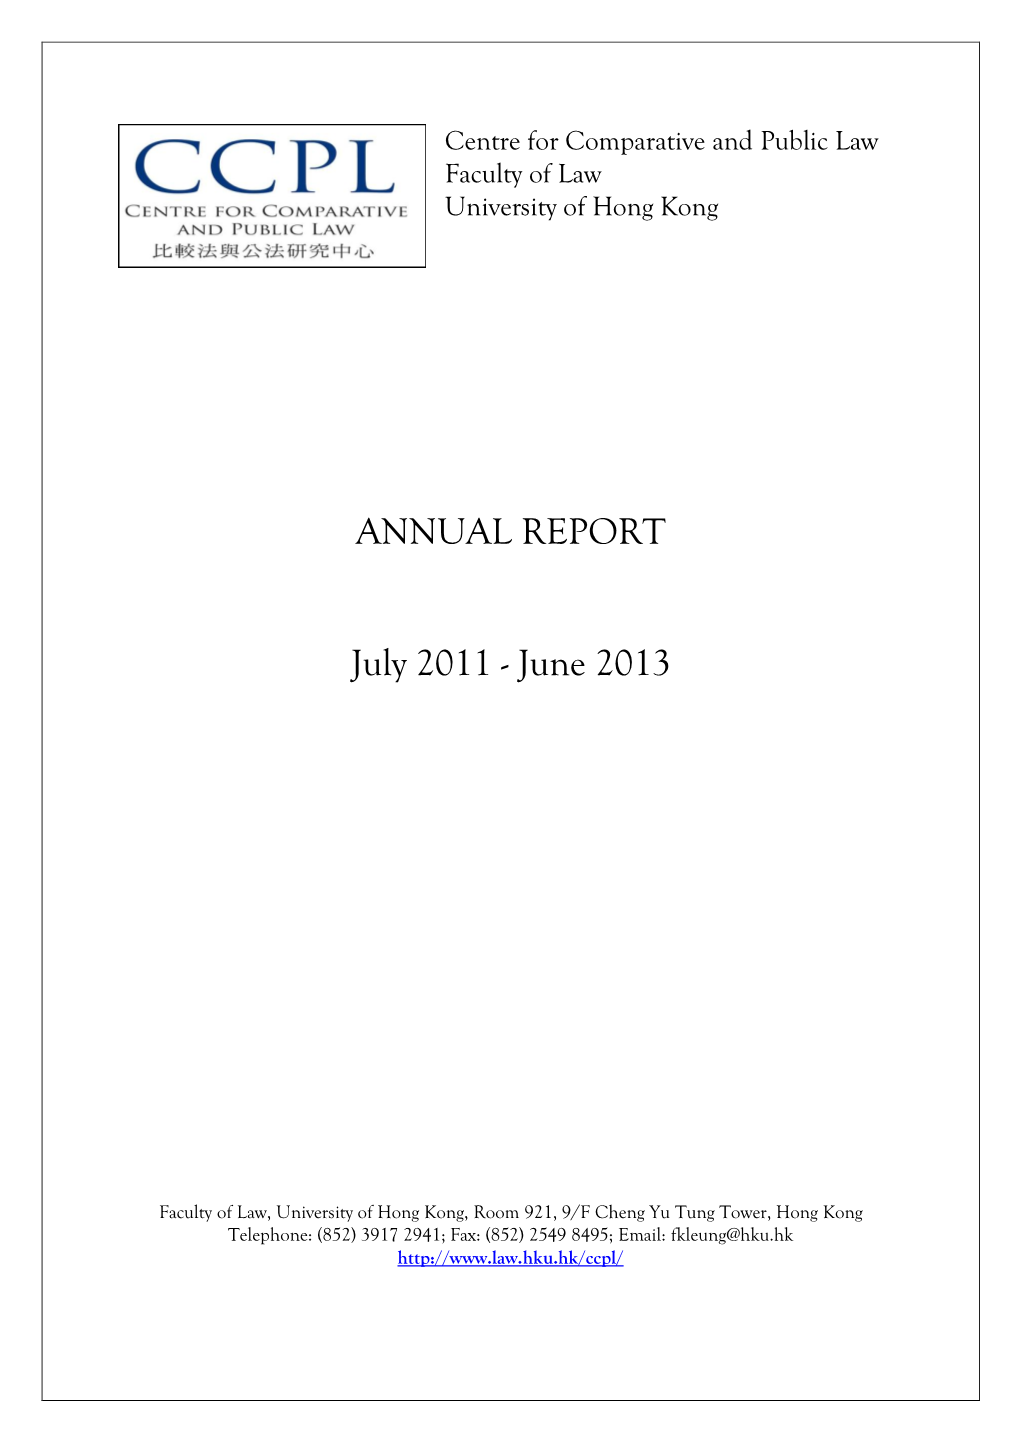 Annual Report 2011 – 2013